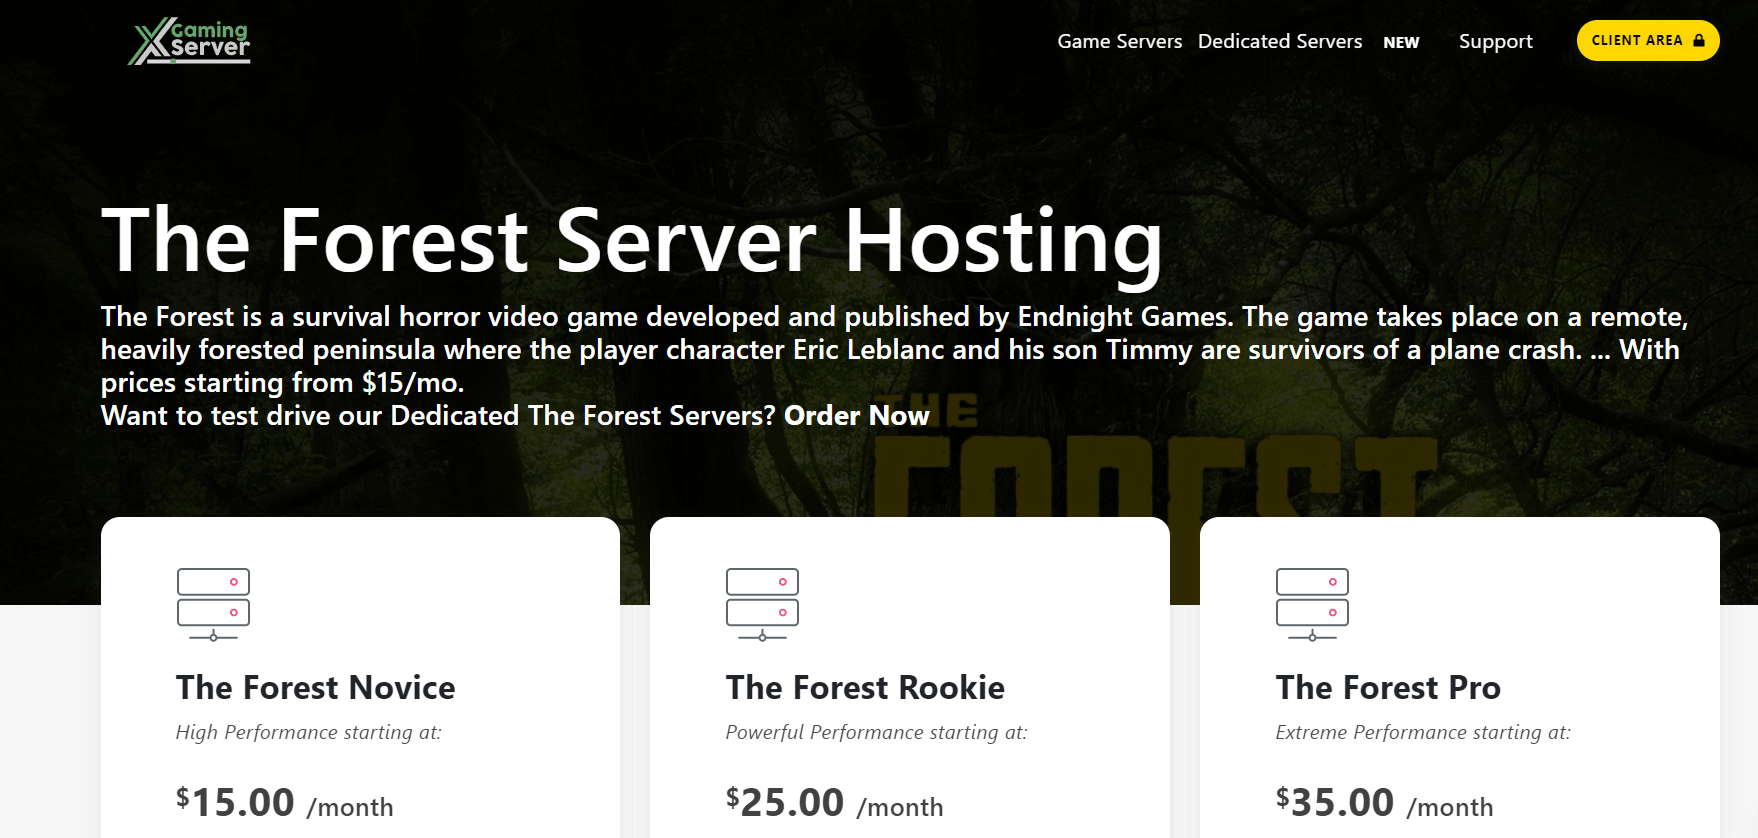 Subscription plans for The Forest server hosting by Xgamingserver